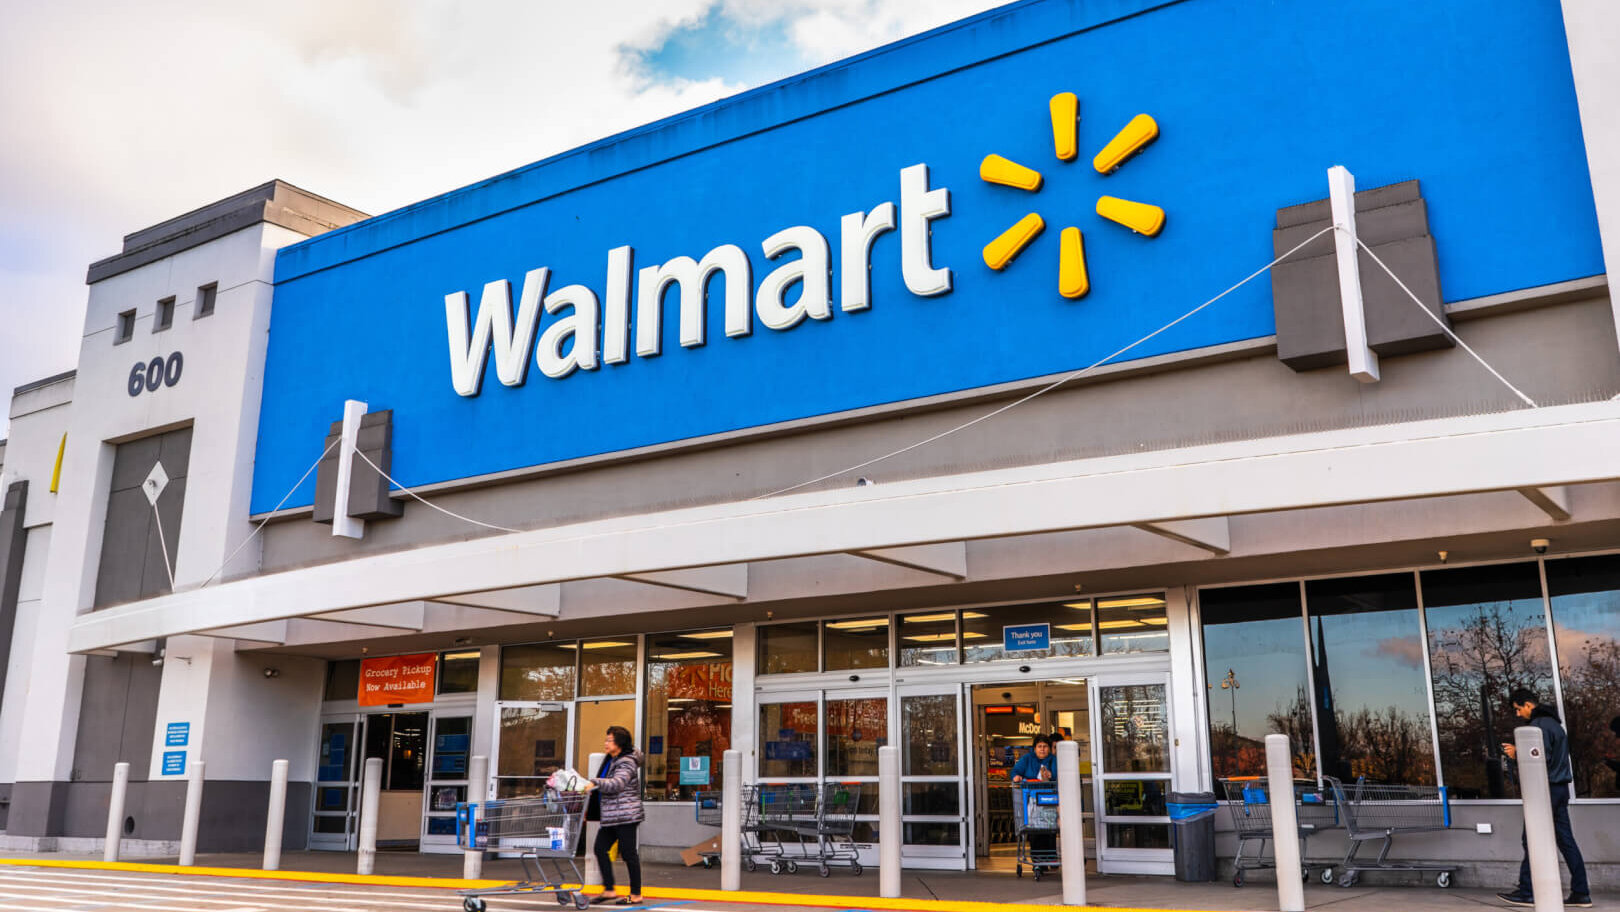 This Walmart+ sale is offering members big discounts on groceries